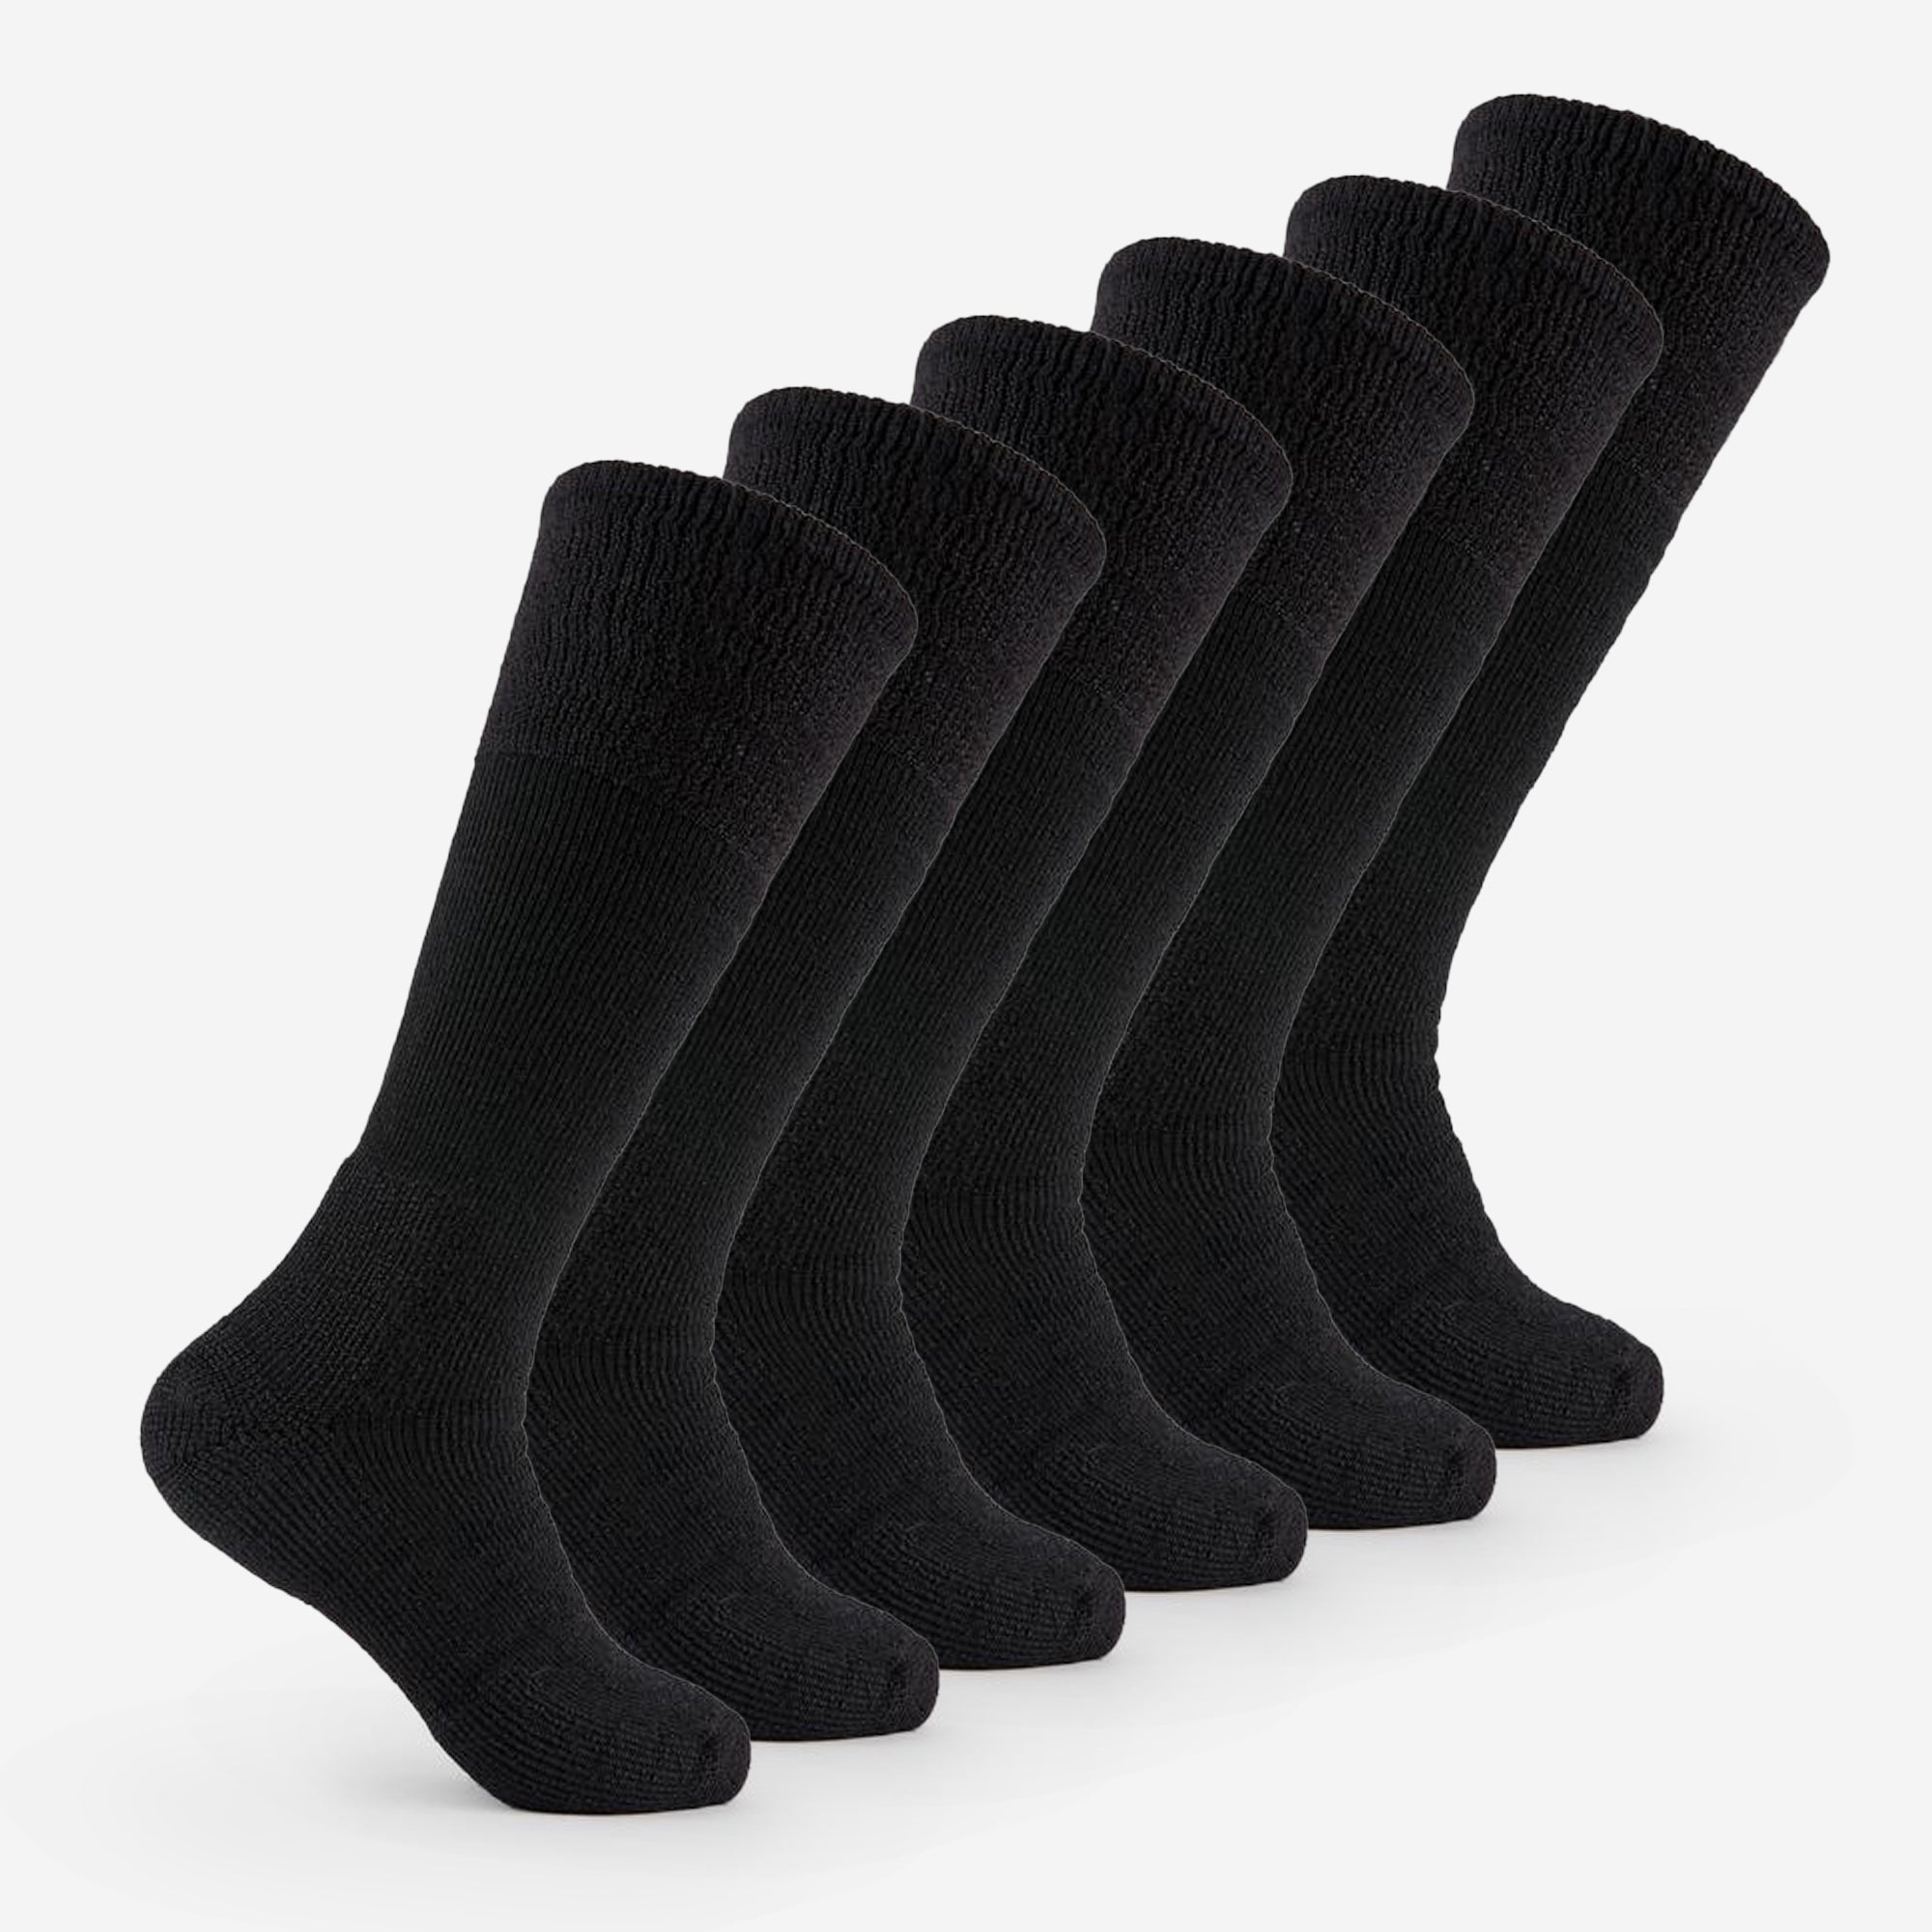 Thorlo - Maximum Cushion Over-Calf Military Socks (6 Pairs) , MCB , Pay For 5, Get 1 FREE!